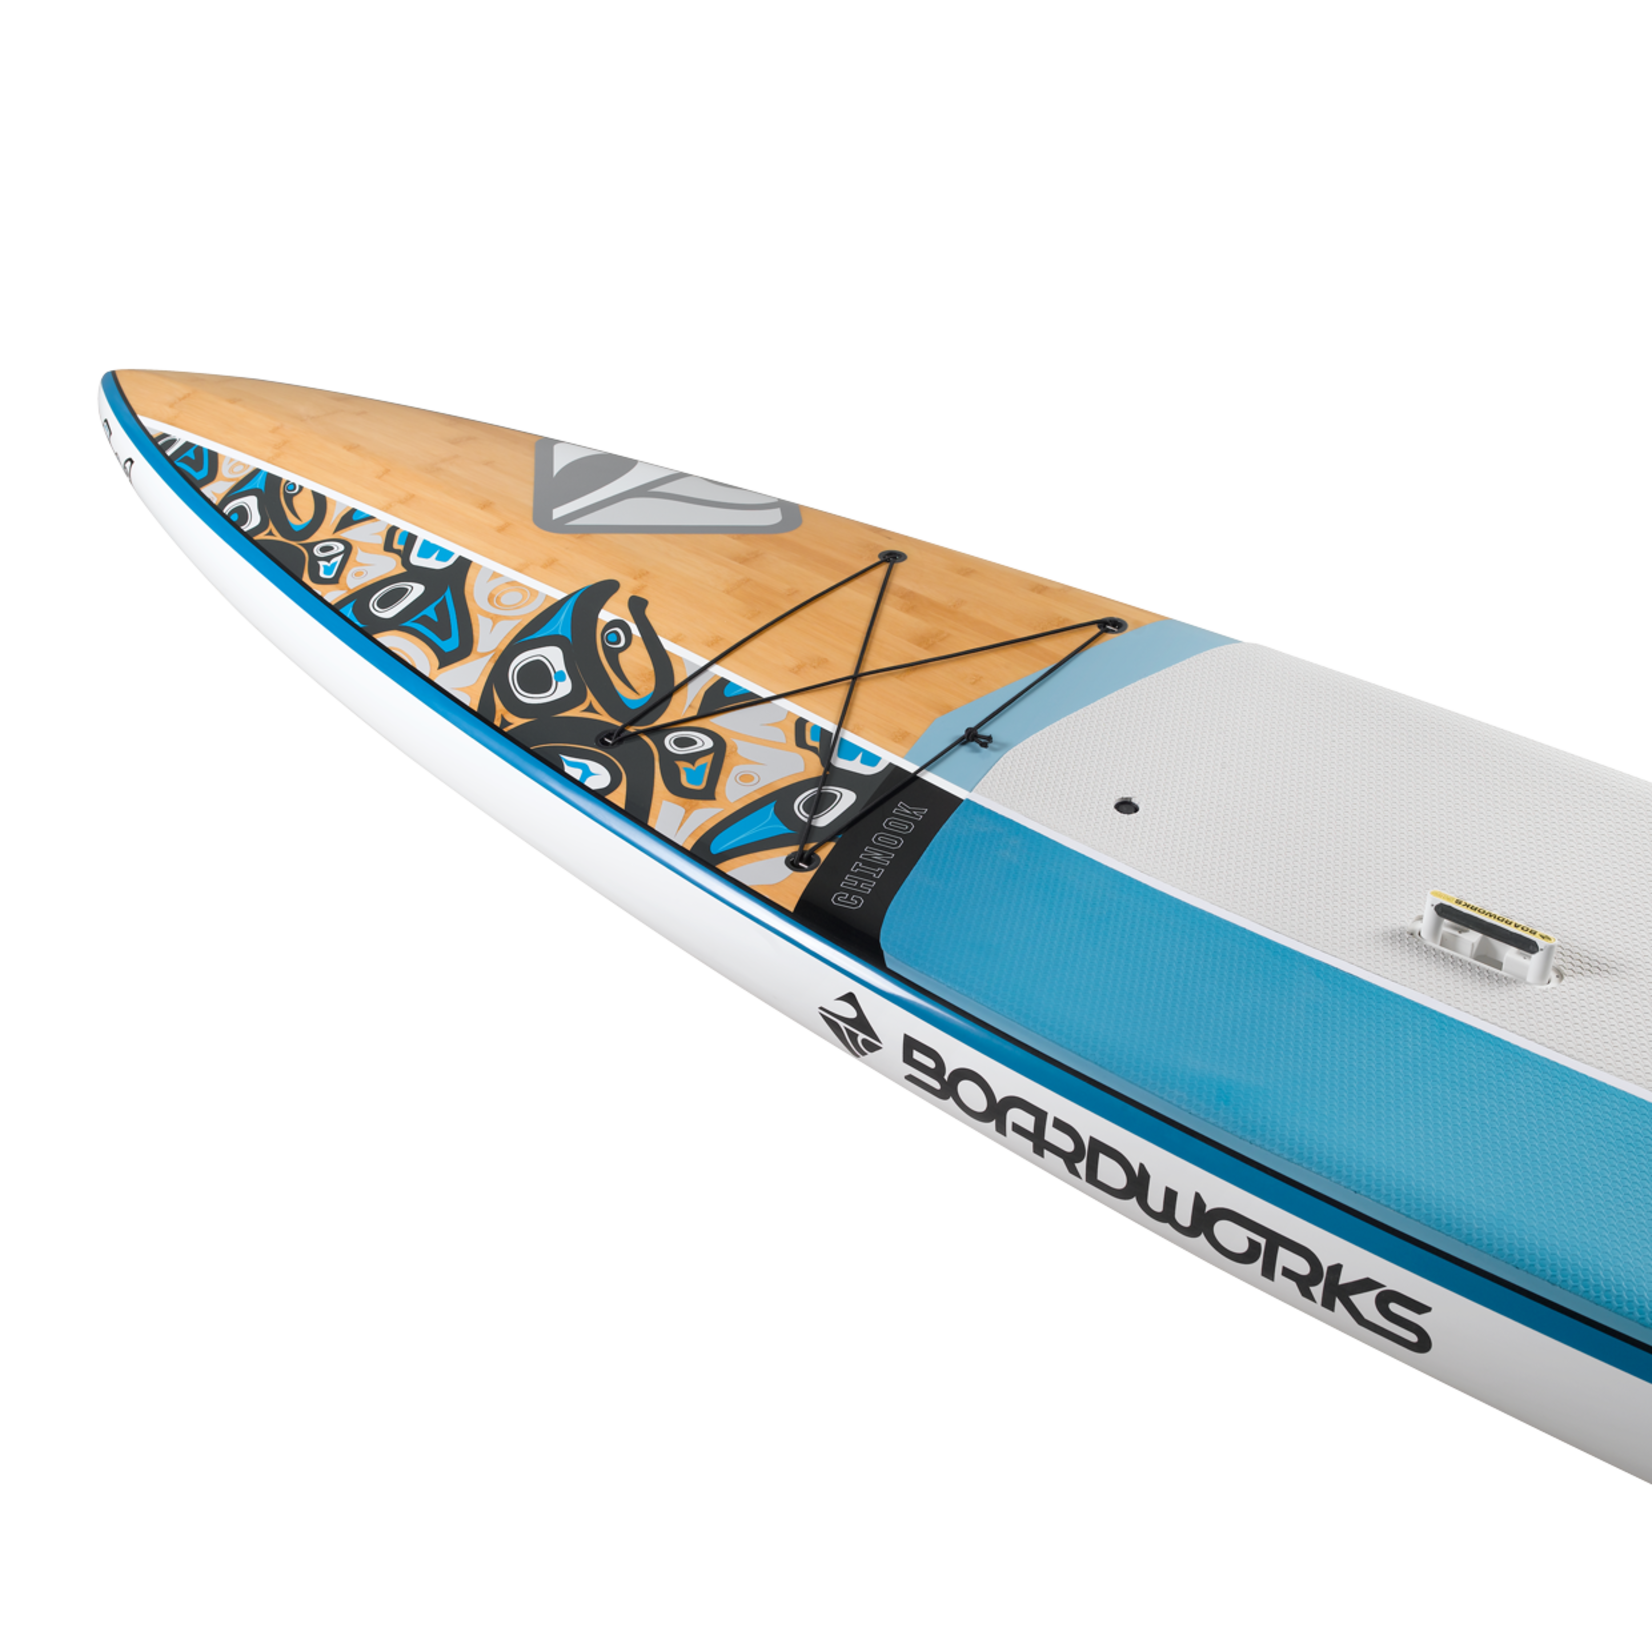 Boardworks Planche à pagaie rigide Chinook de Boardworks